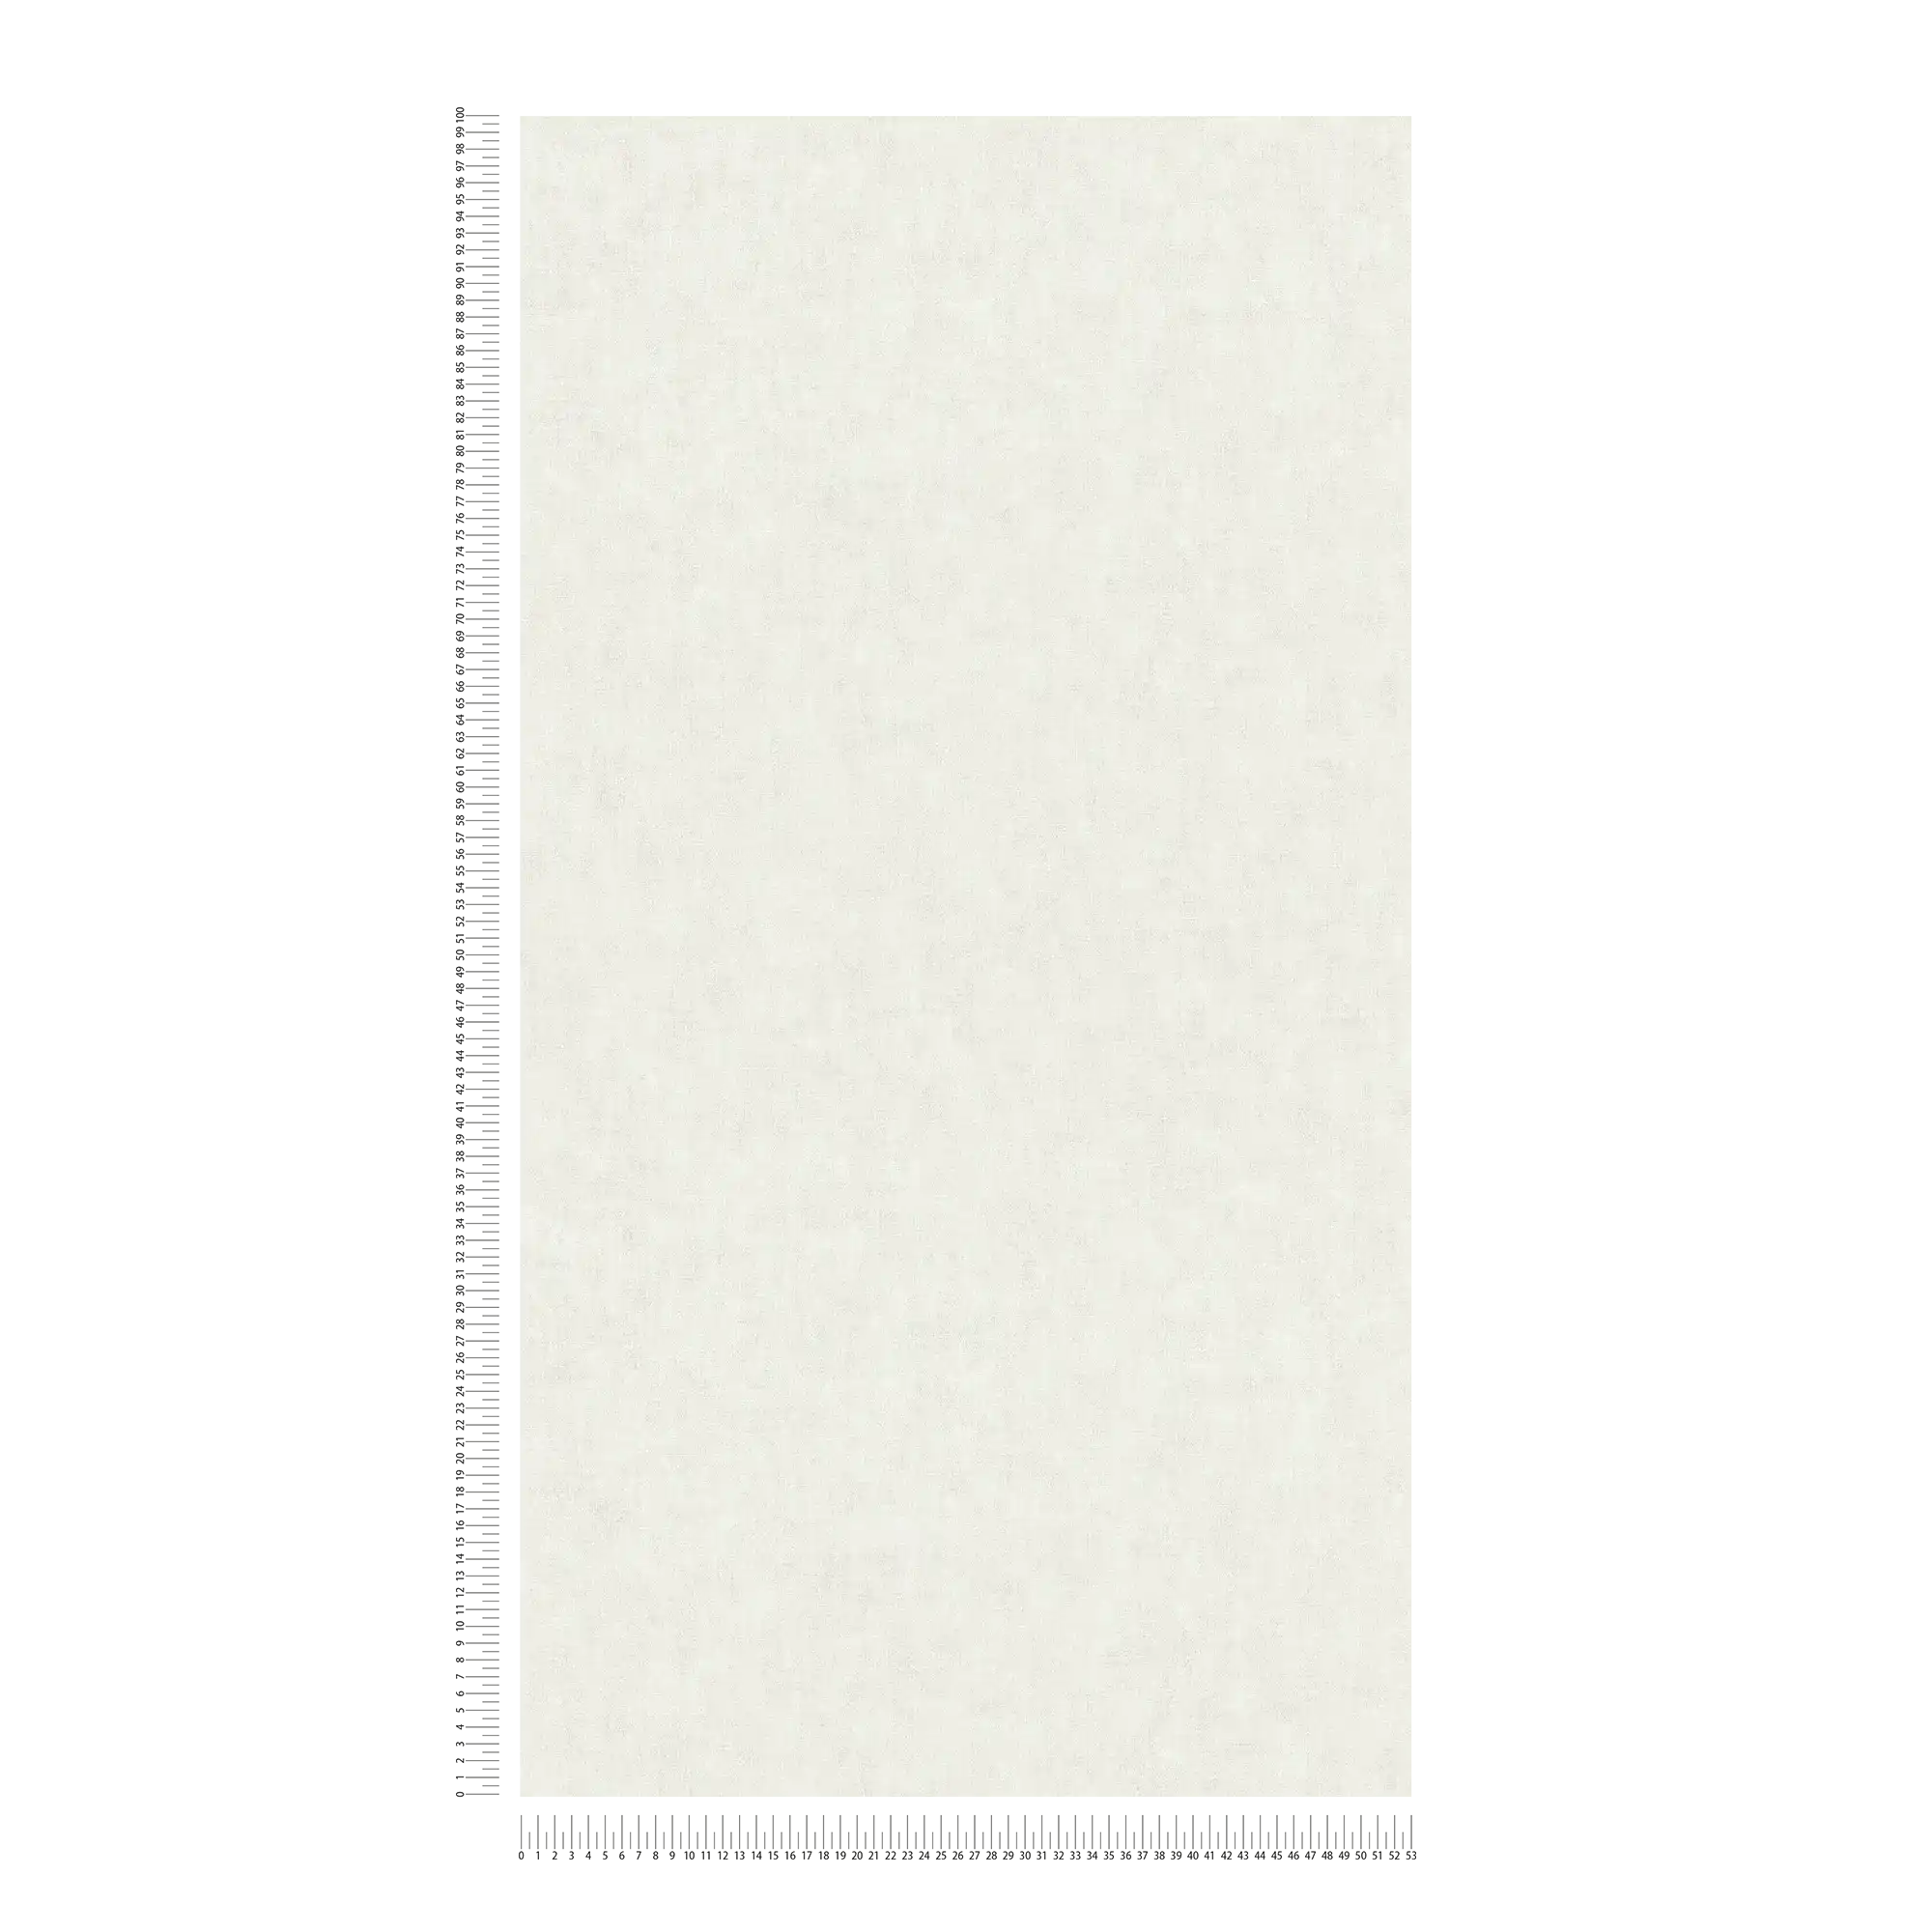             Scandinavian style plain wallpaper with linen look - cream
        